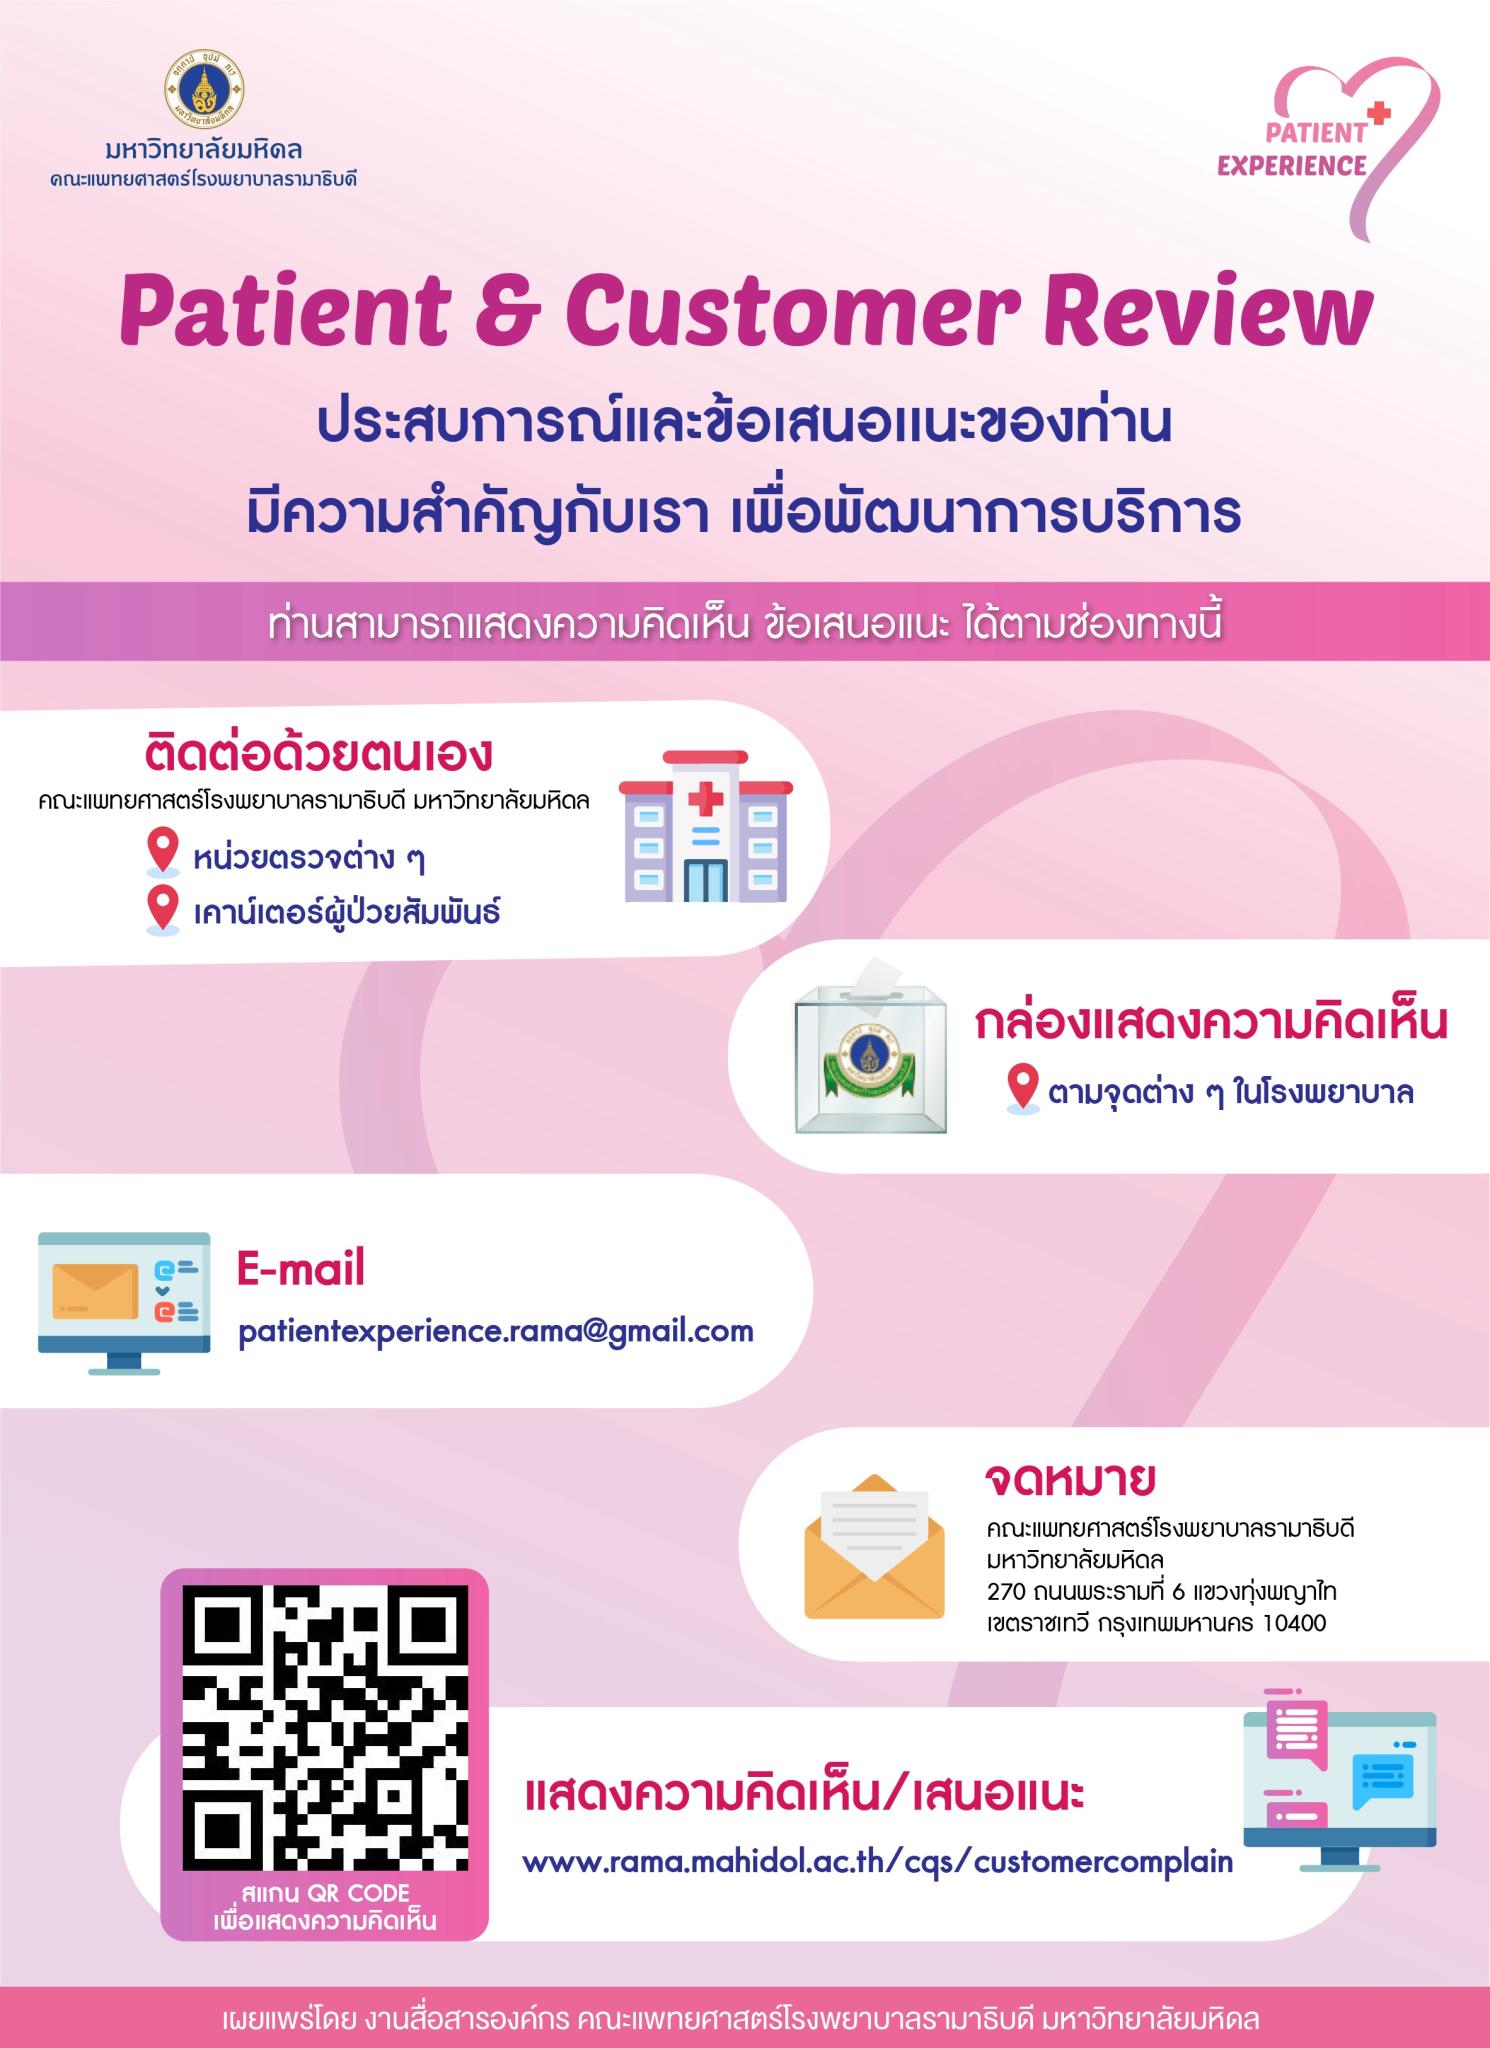 Patient & Customer Review ประสบการณ์และข้อเสนอแนะของท่านมีความสำคัญกับเรา เพื่อพัฒนาการบริการ